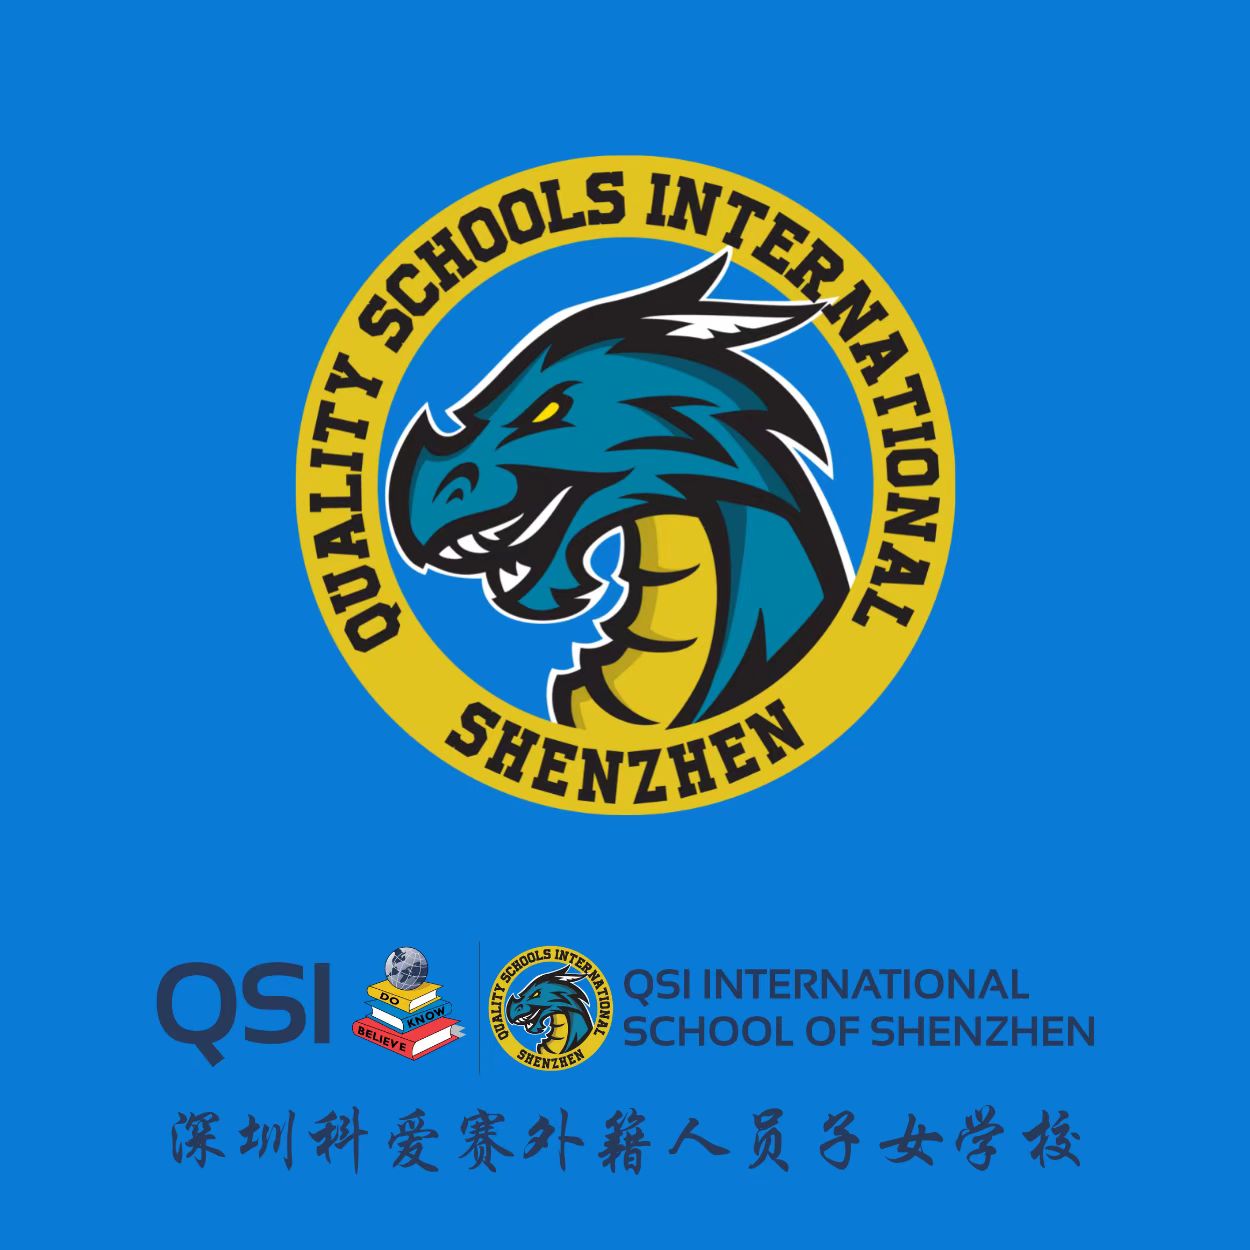 Featured image for “QSI International School of Shenzhen”